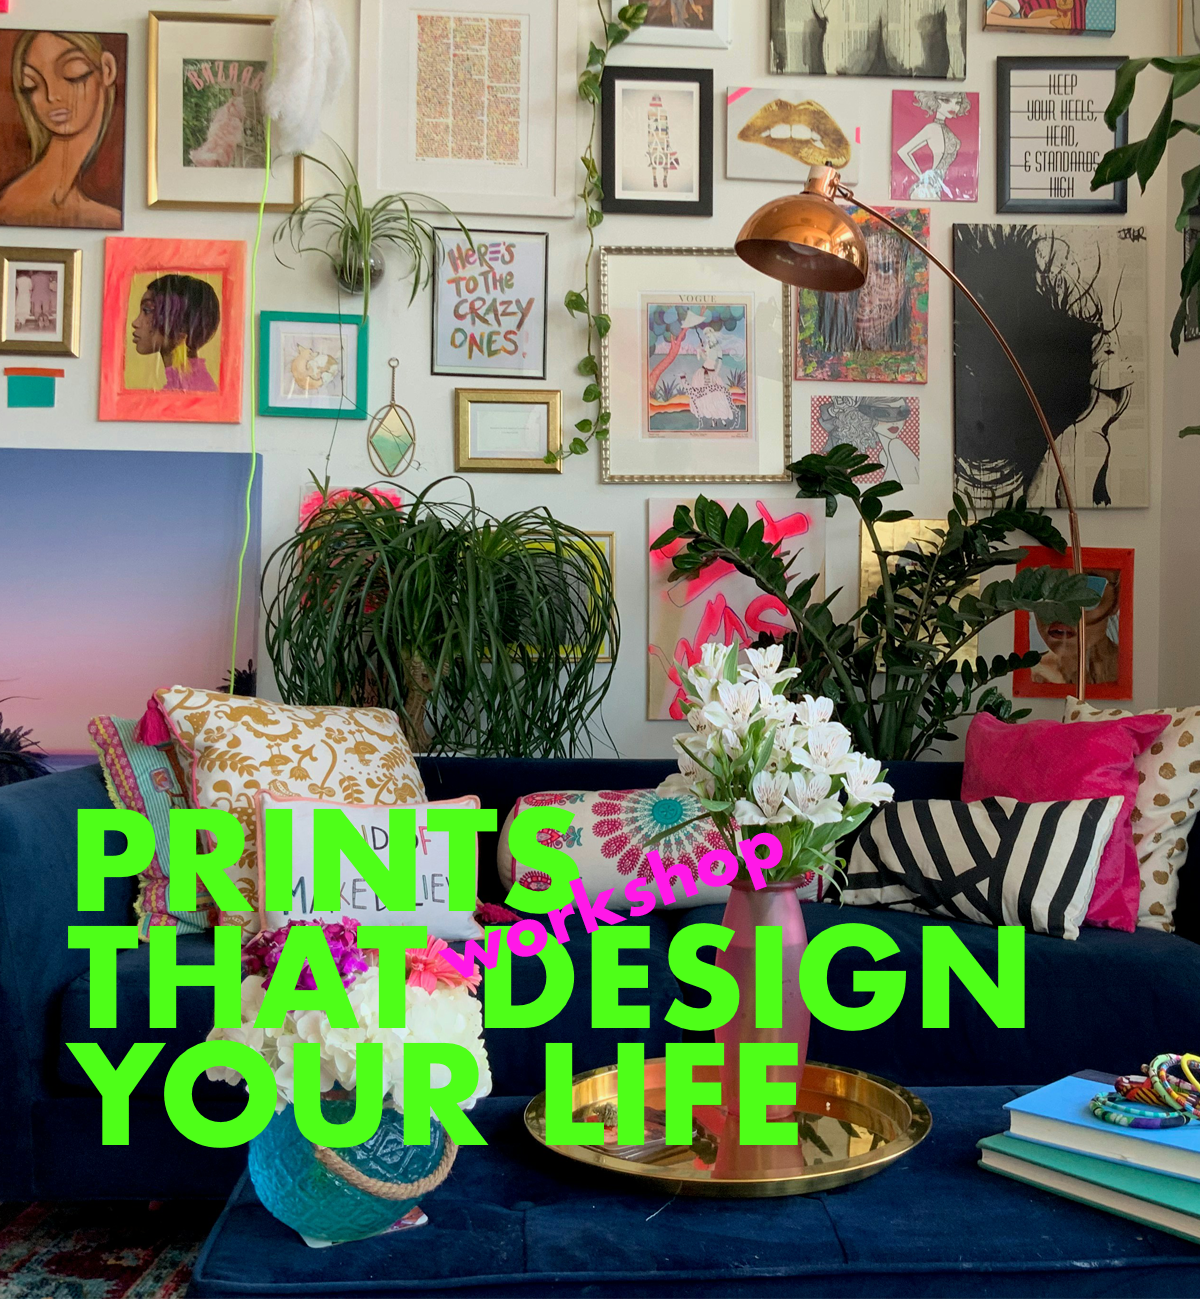 Workshop ”Prints that design your life”